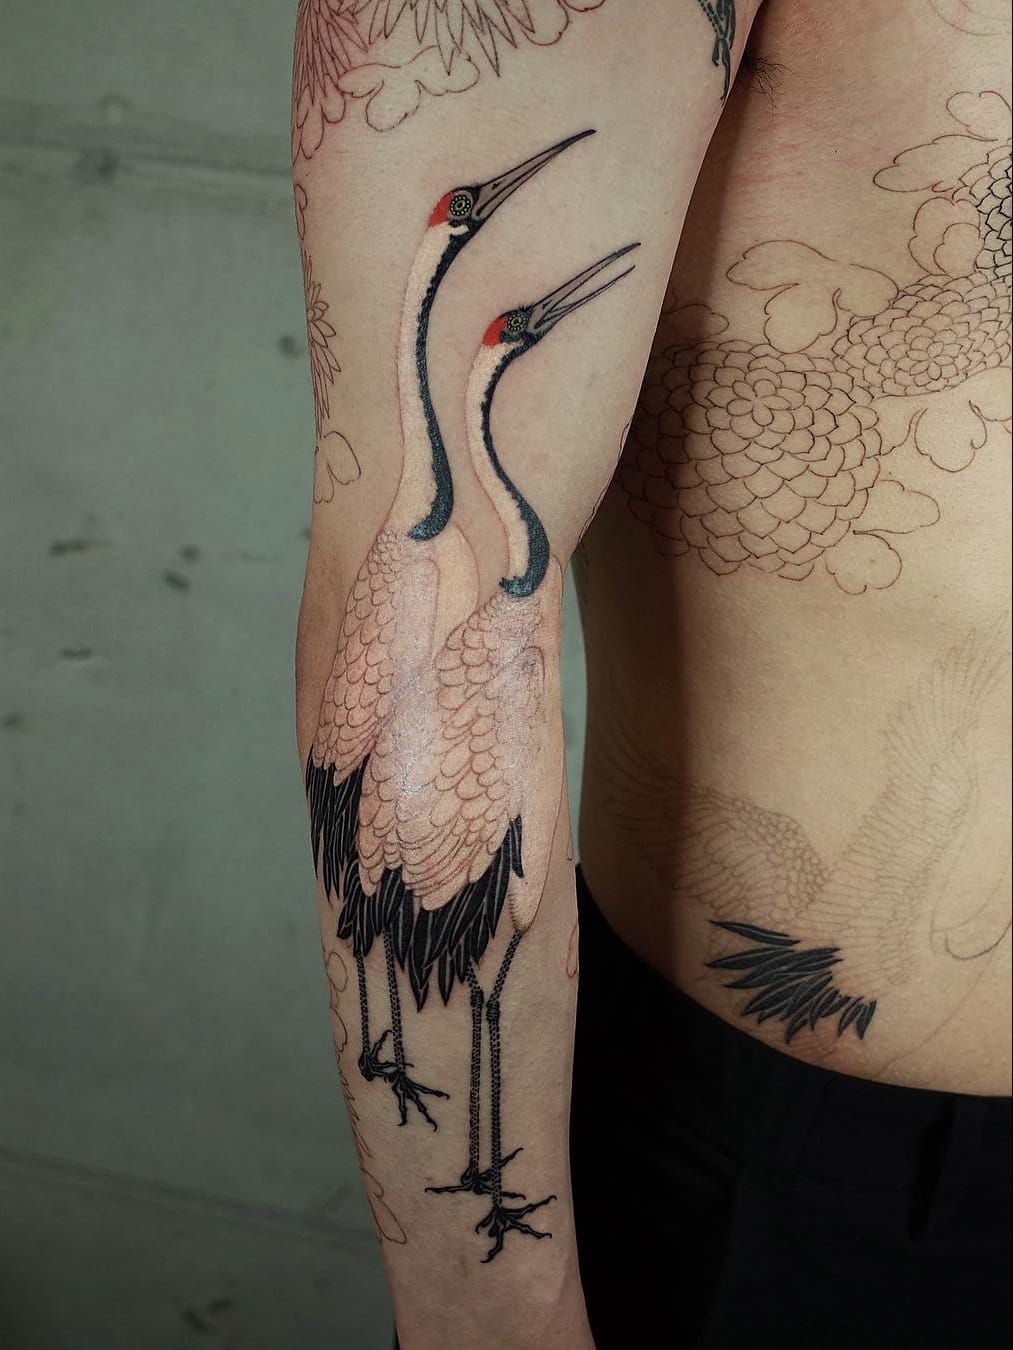 𝓜𝓪𝓴𝓪𝔂𝓵𝓪 𝓛𝓮𝓮 on Instagram Sand hill crane      𝓑𝓸𝓸𝓴𝓲𝓷𝓰 𝓙𝓐𝓝𝓤𝓐𝓡𝓨 𝚢𝚘𝚞𝚛 𝚒𝚍𝚎𝚊 𝚘𝚛 𝚖𝚒𝚗𝚎 Th  Crane  tattoo Tattoos Crane